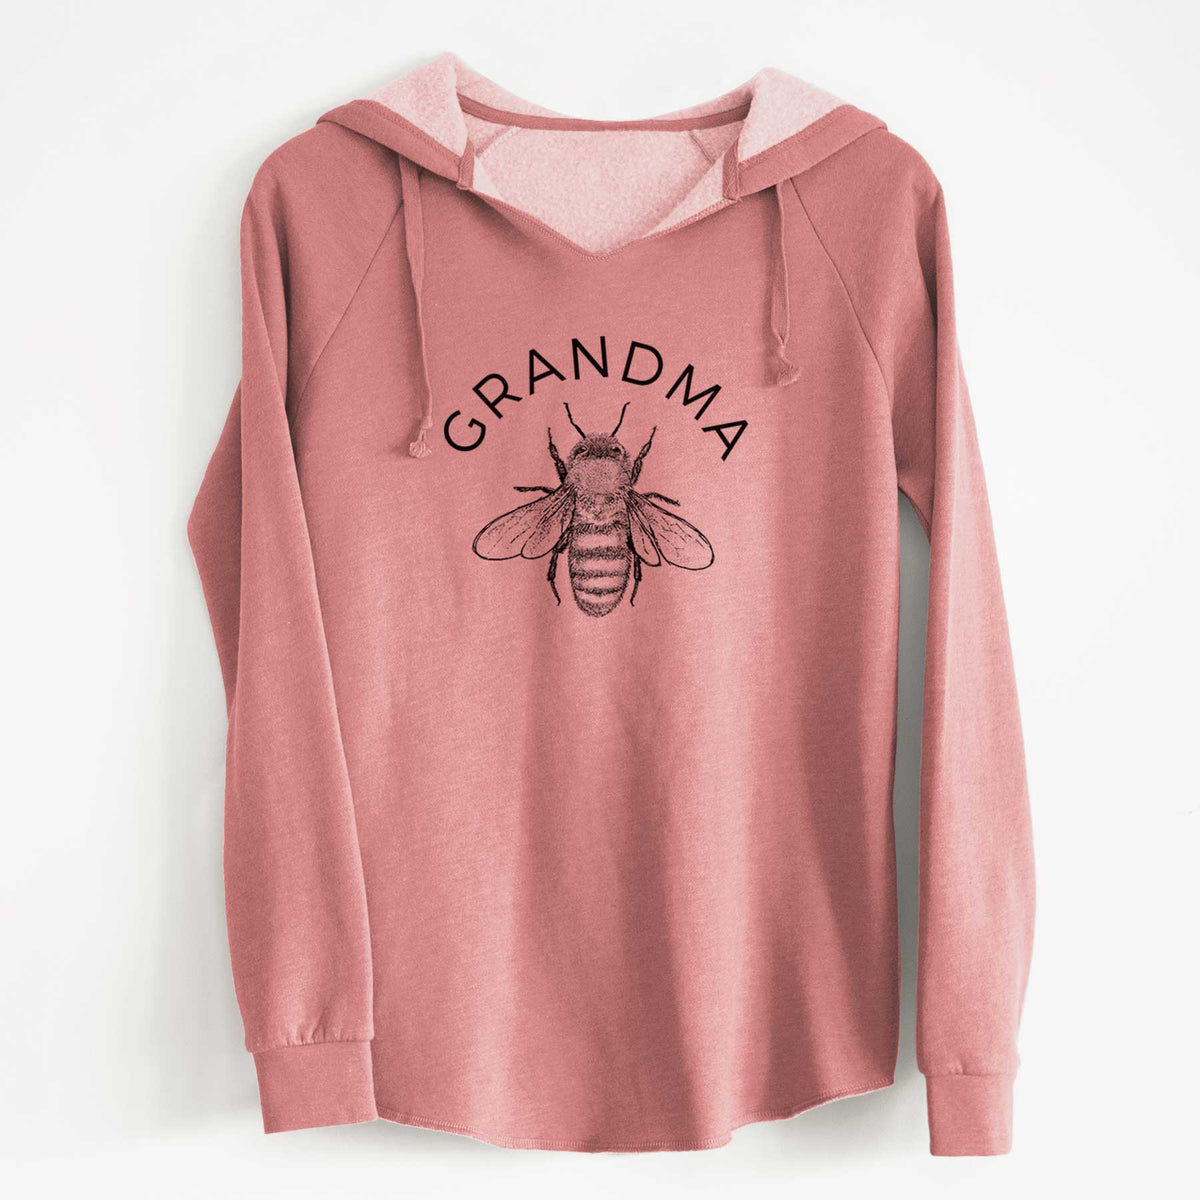 Grandma Bee - Cali Wave Hooded Sweatshirt